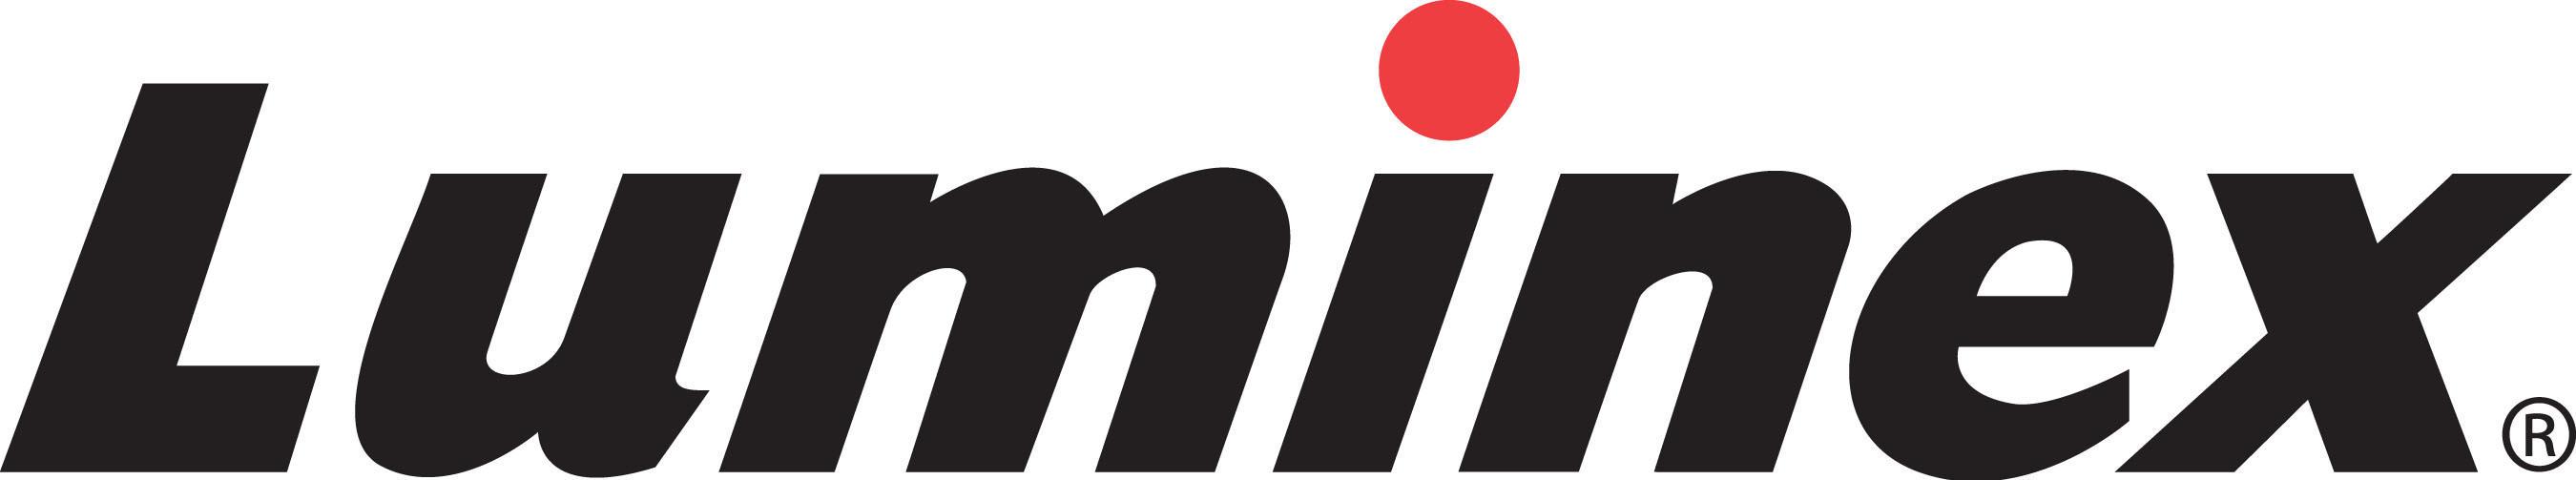 Luminex logo.